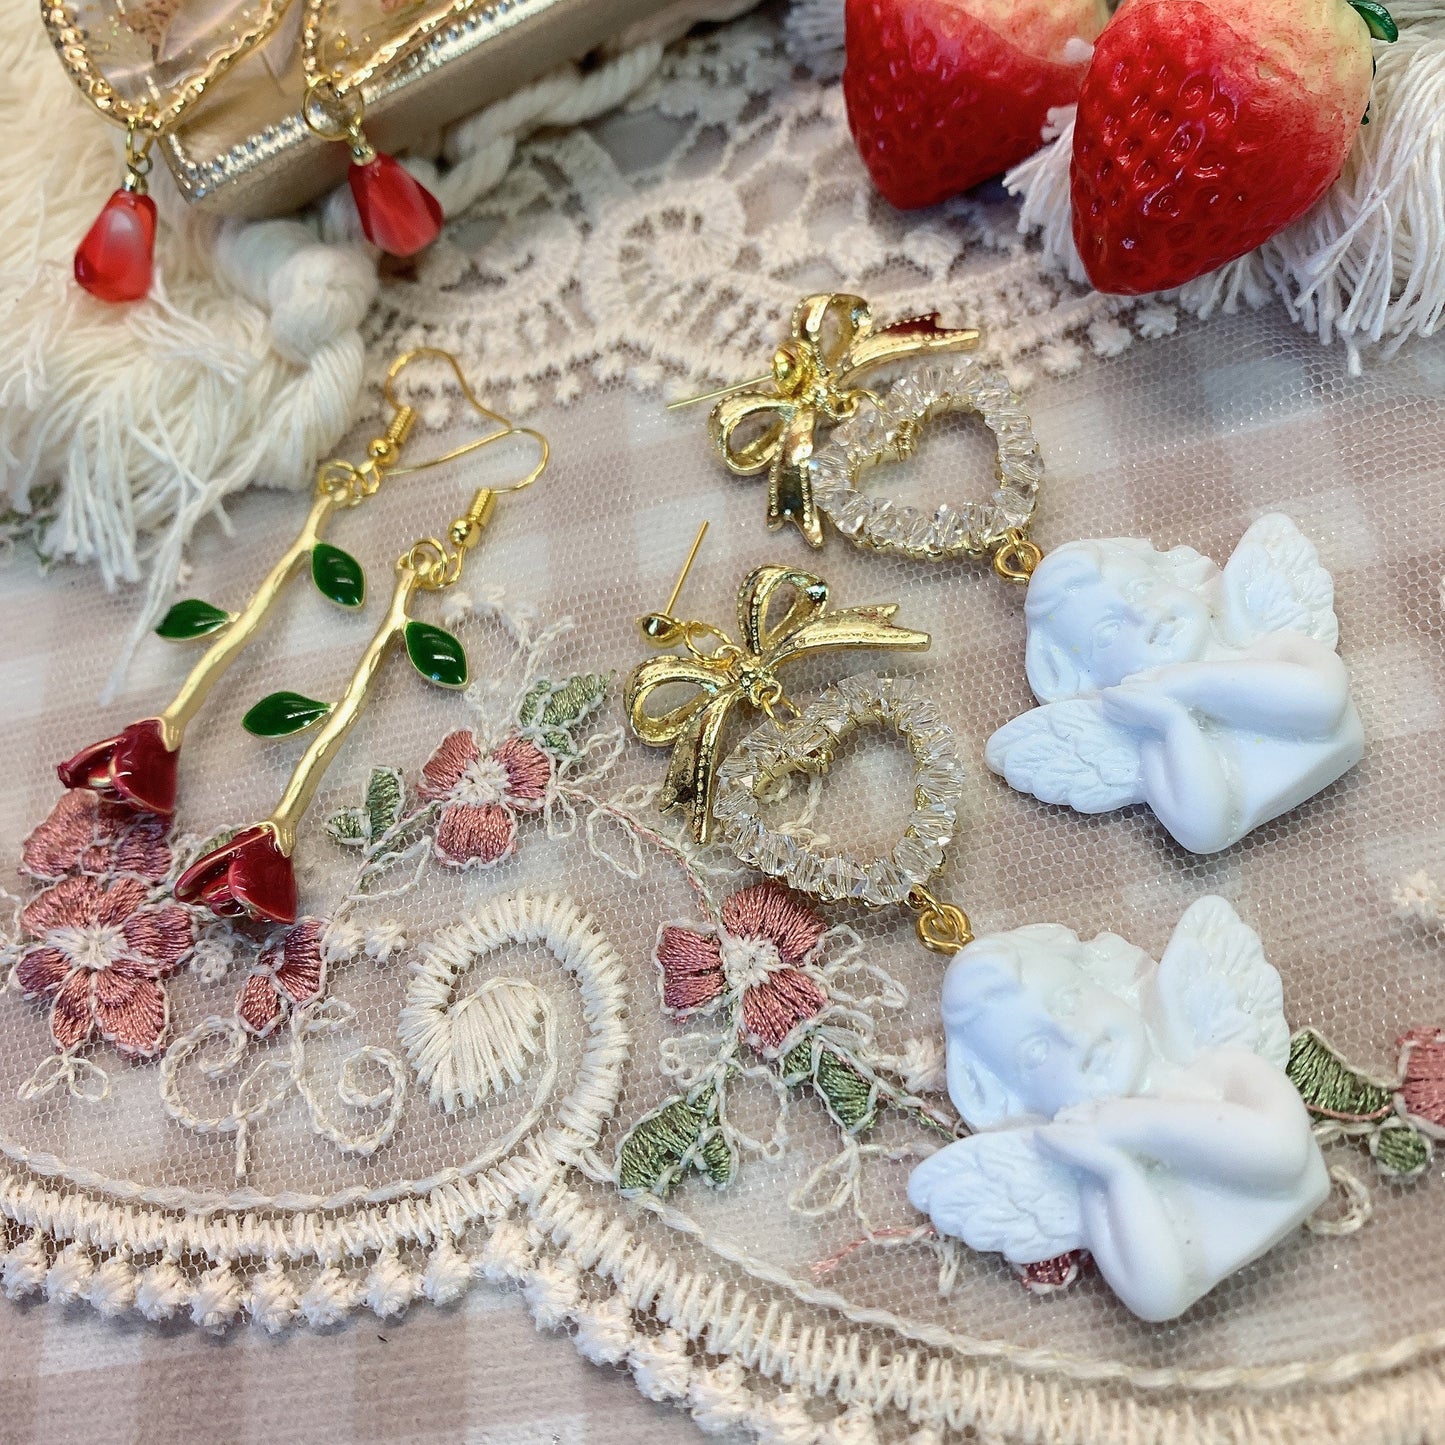 Moya handmade earrings「The angel of love」